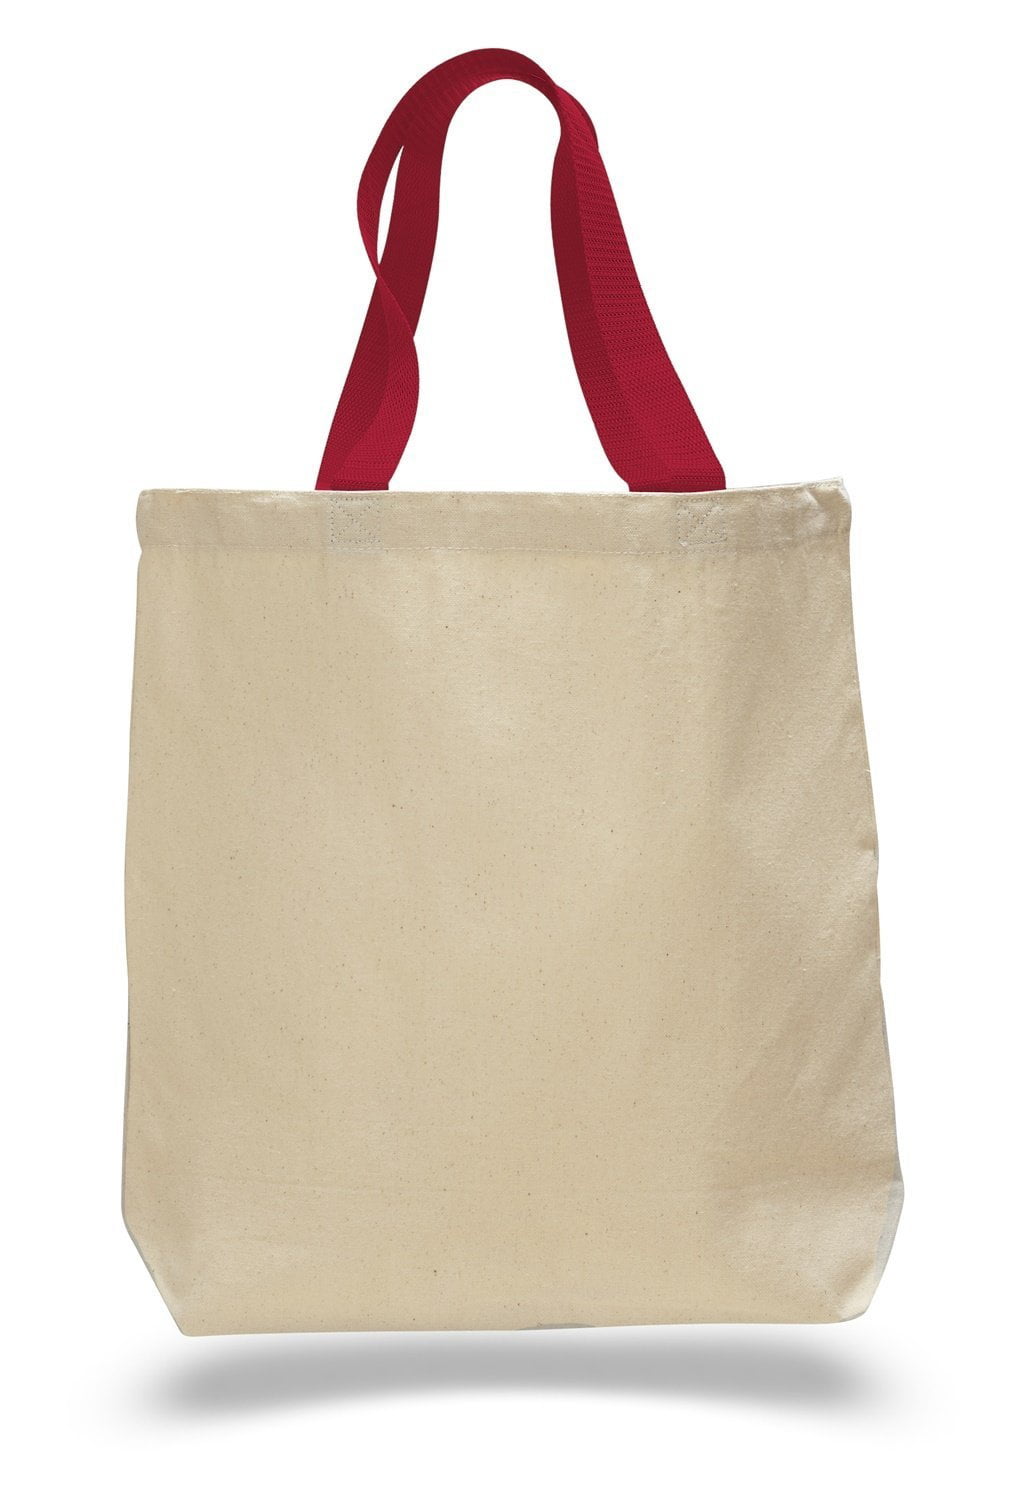 TBF - Canvas Tote Bag W/Color Handles Art Craft Blank Tote - 0 - 0